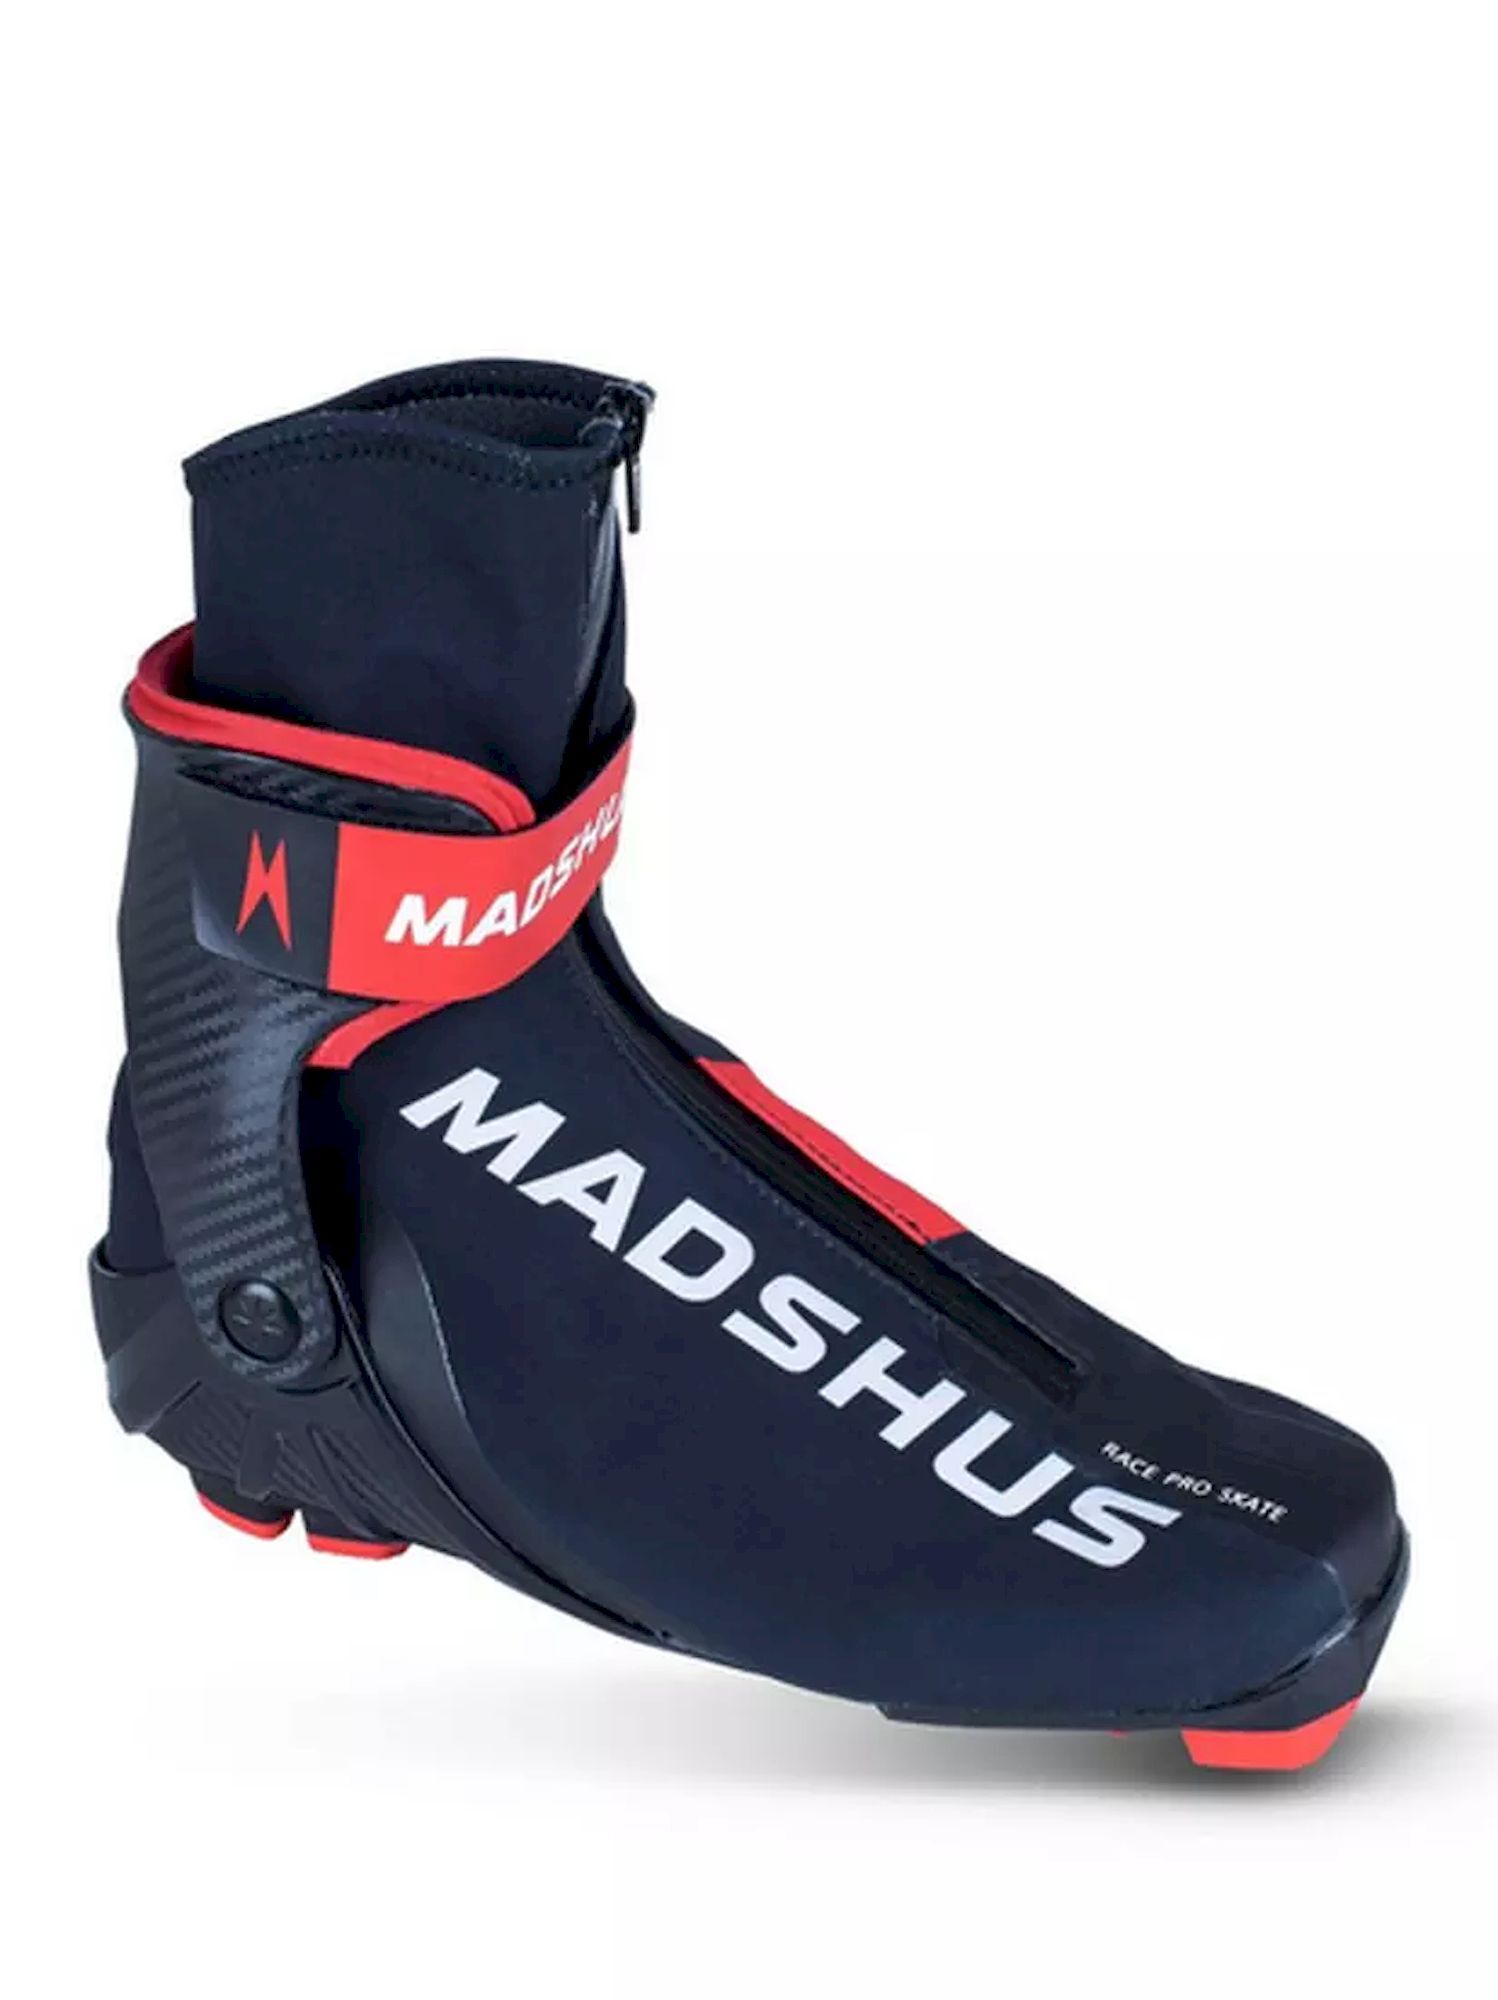 Madshus Race Pro Skate - Buty do nart biegowych | Hardloop